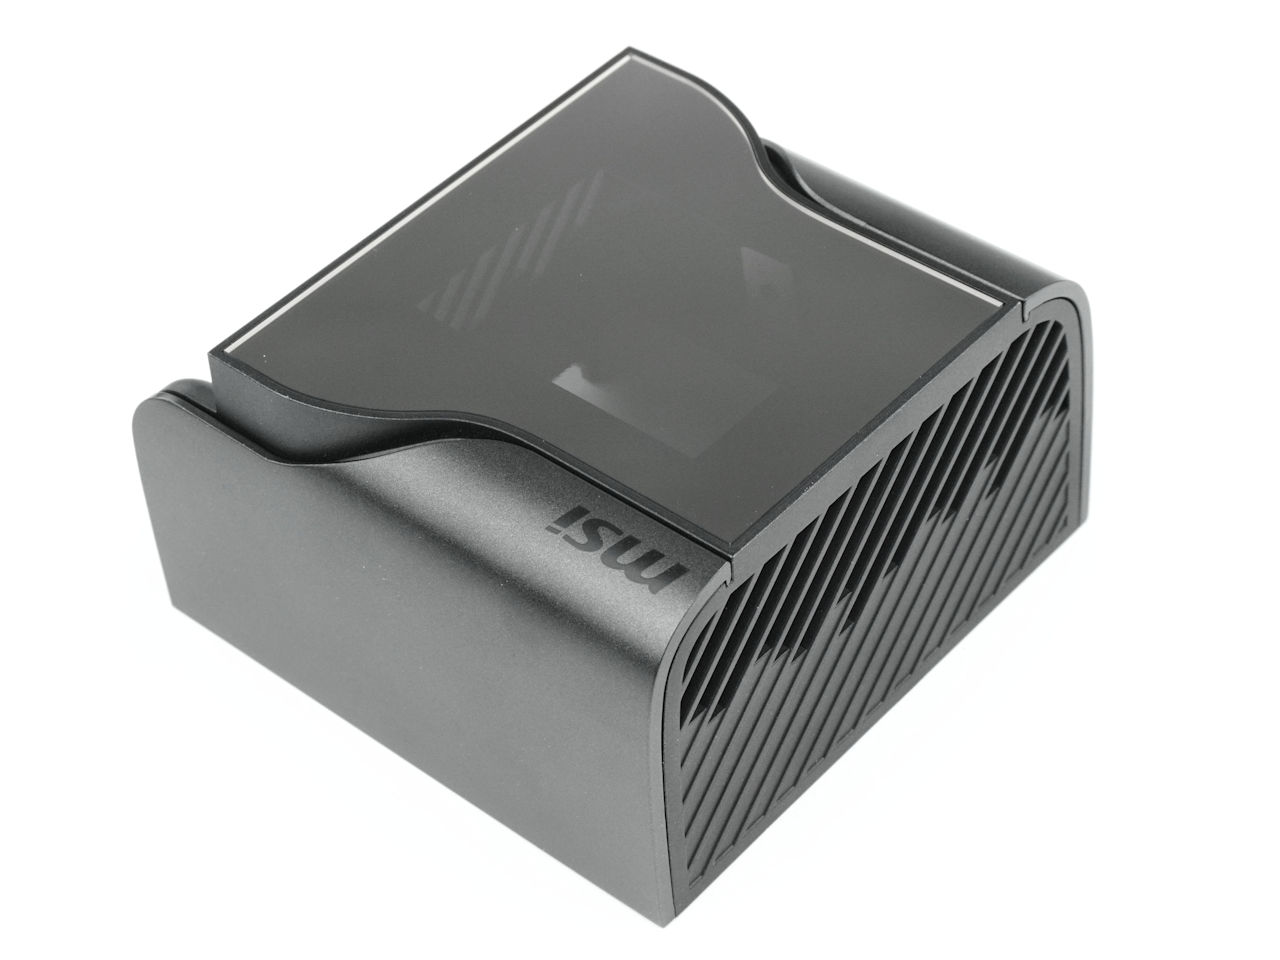 MSI MEG CORELIQUID S360 integrated water cooling